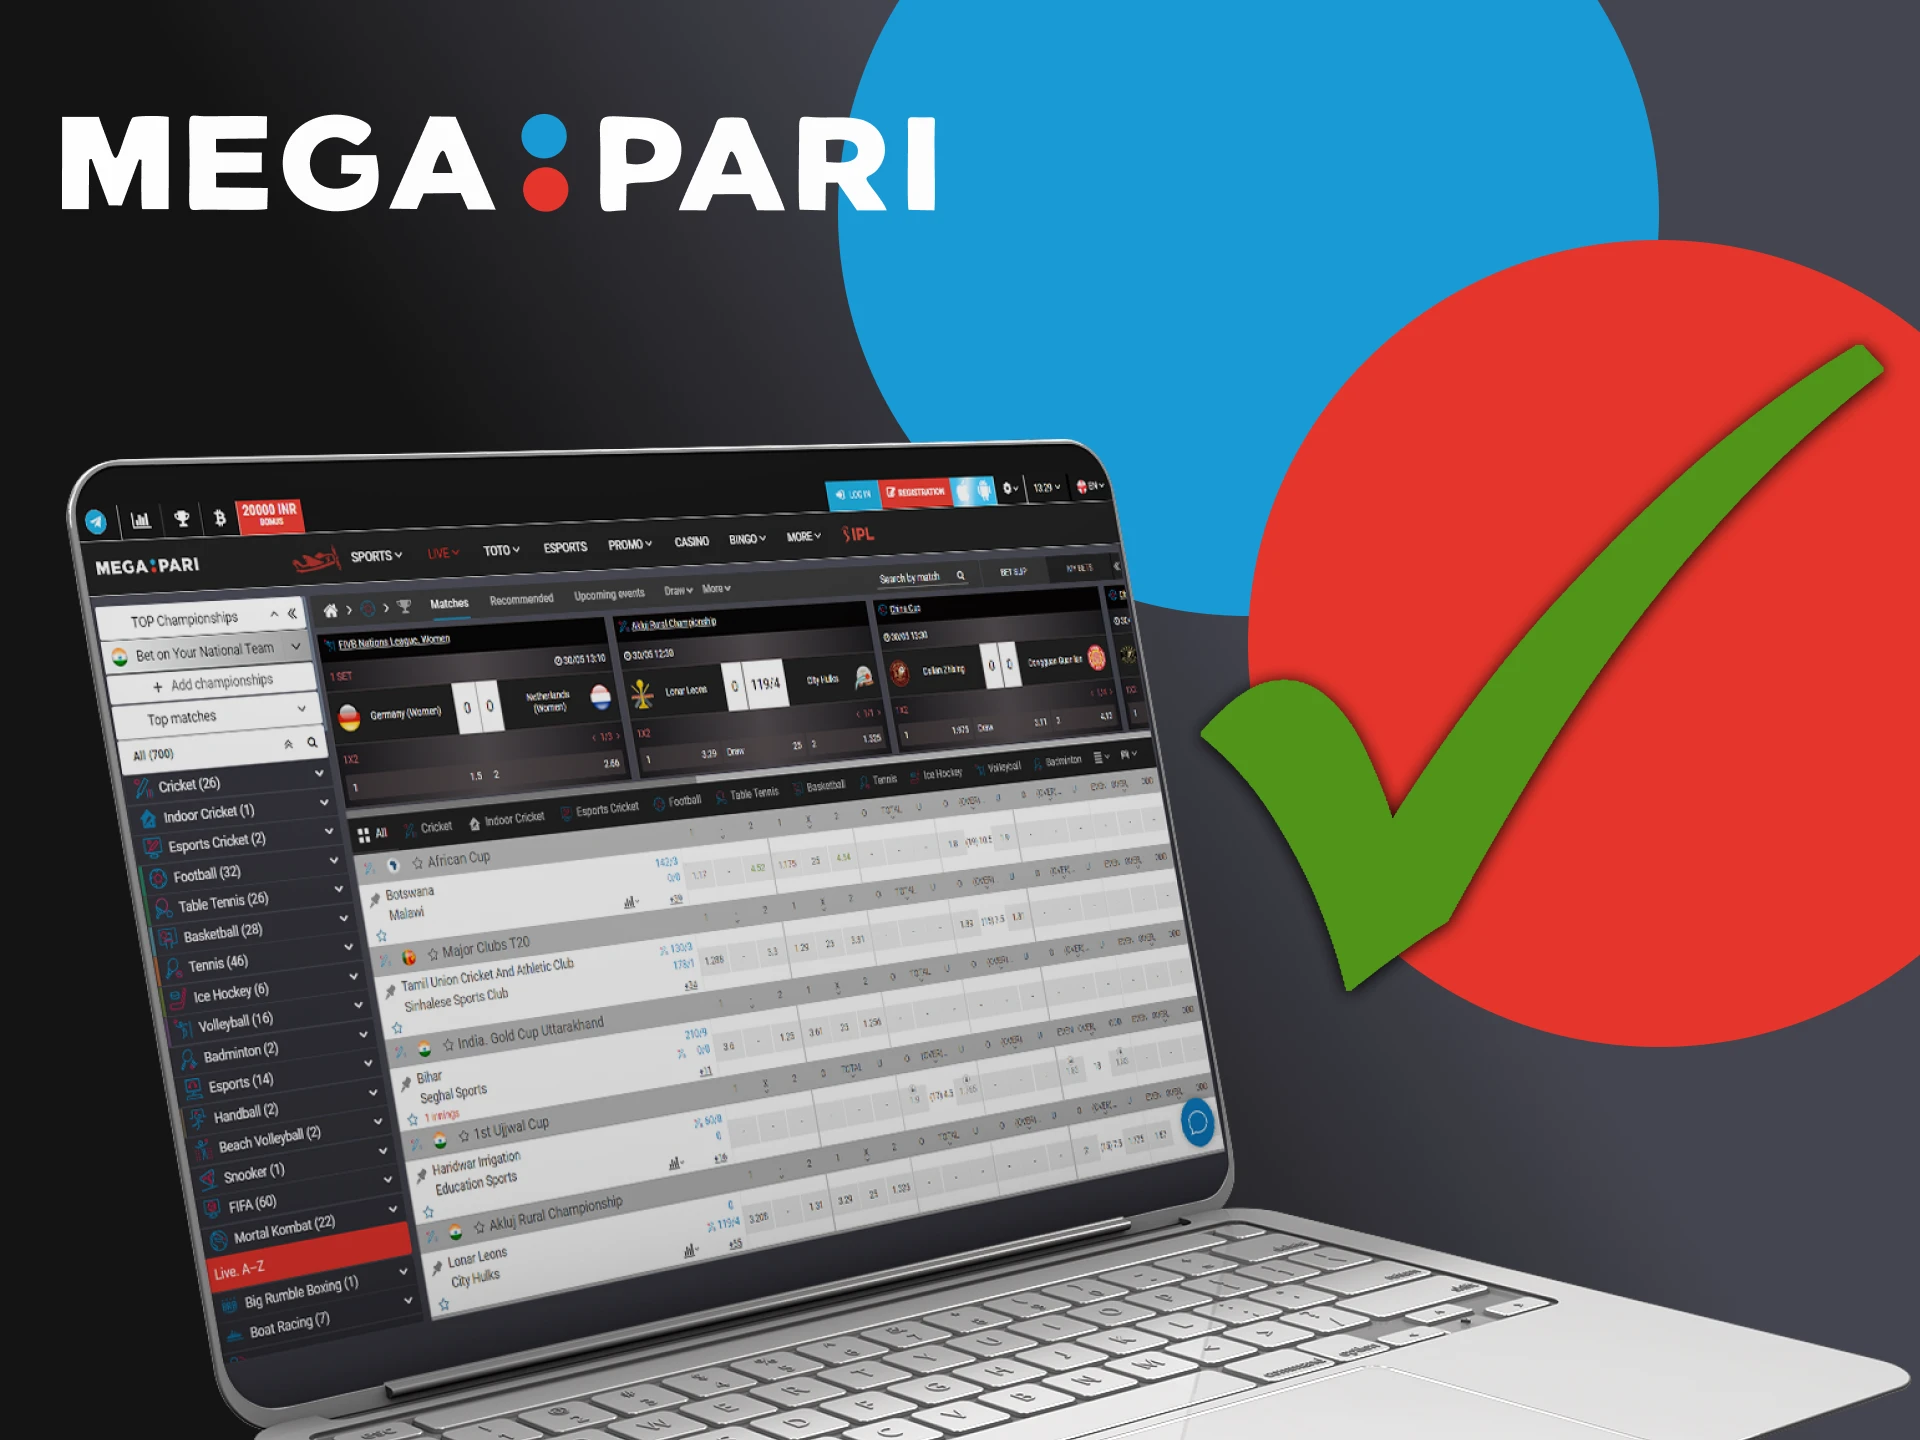 Megapari legally provides betting and casino services.